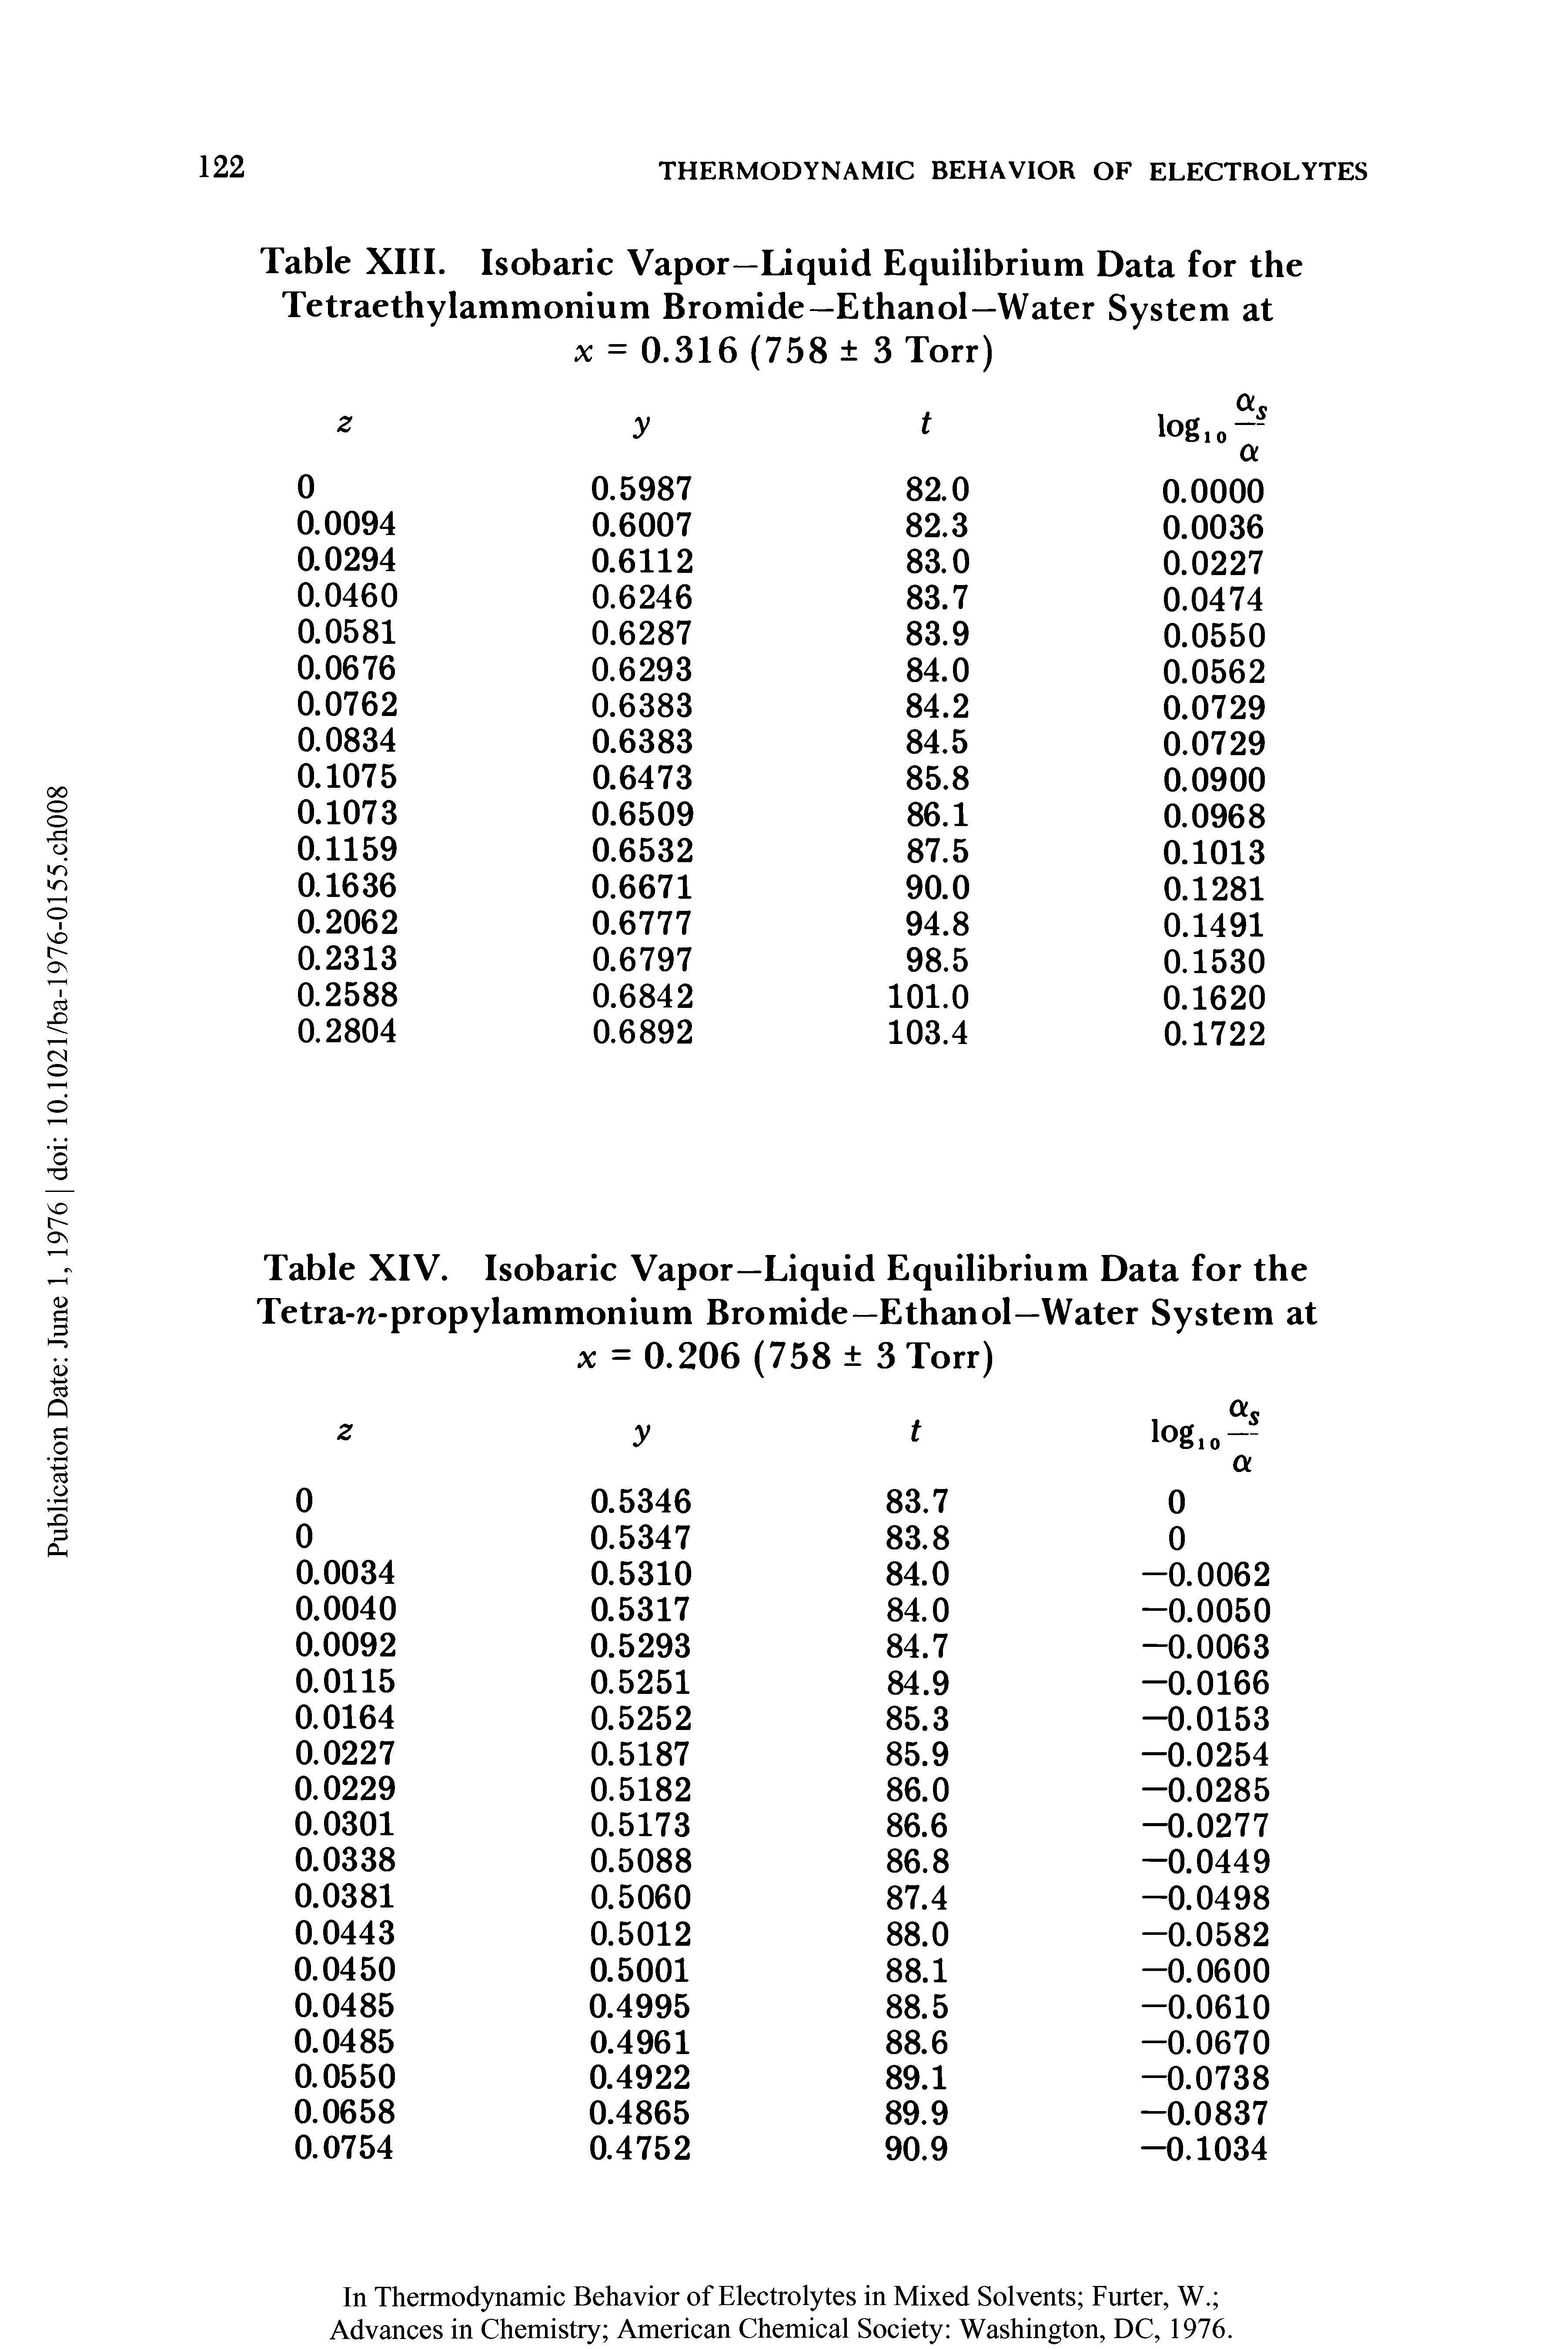 Table XIII. Isobaric Vapor—Liquid Equilibrium Data for the Tetraethylammonium Bromide—Ethanol—Water System at x = 0.316 (758 3 Torr)...